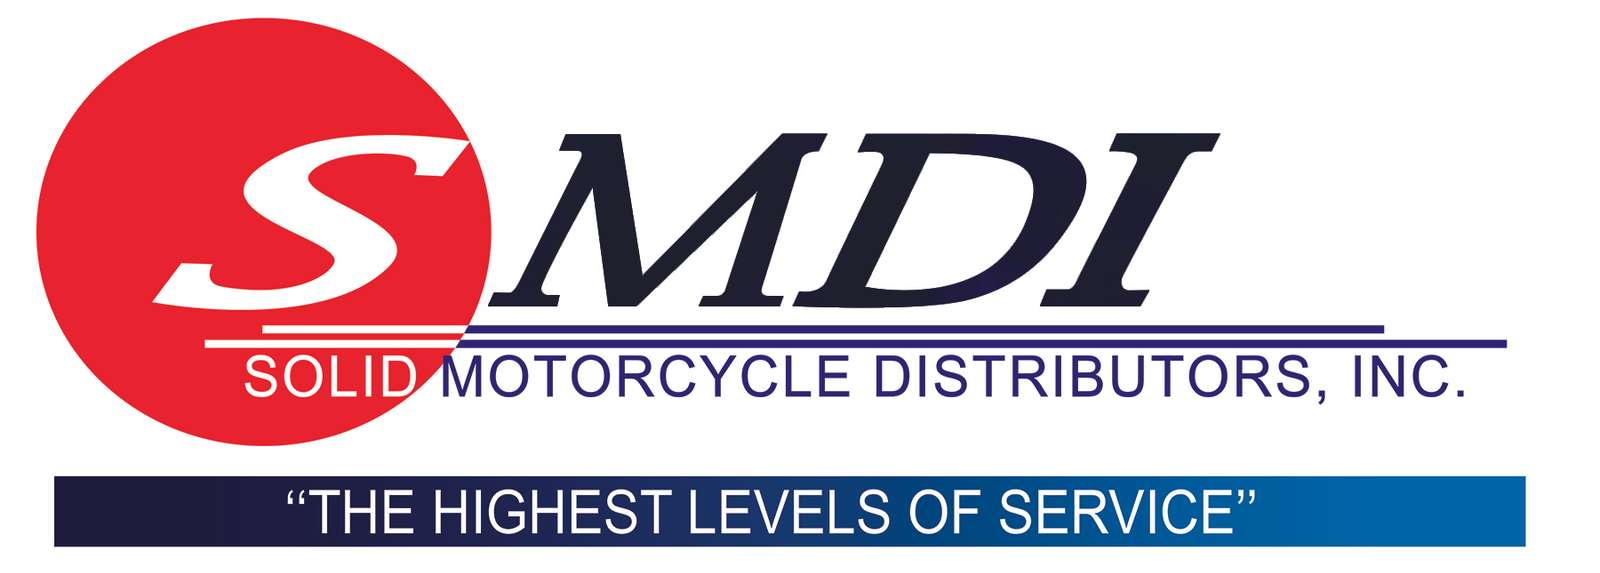 SMDI Logo online puzzle